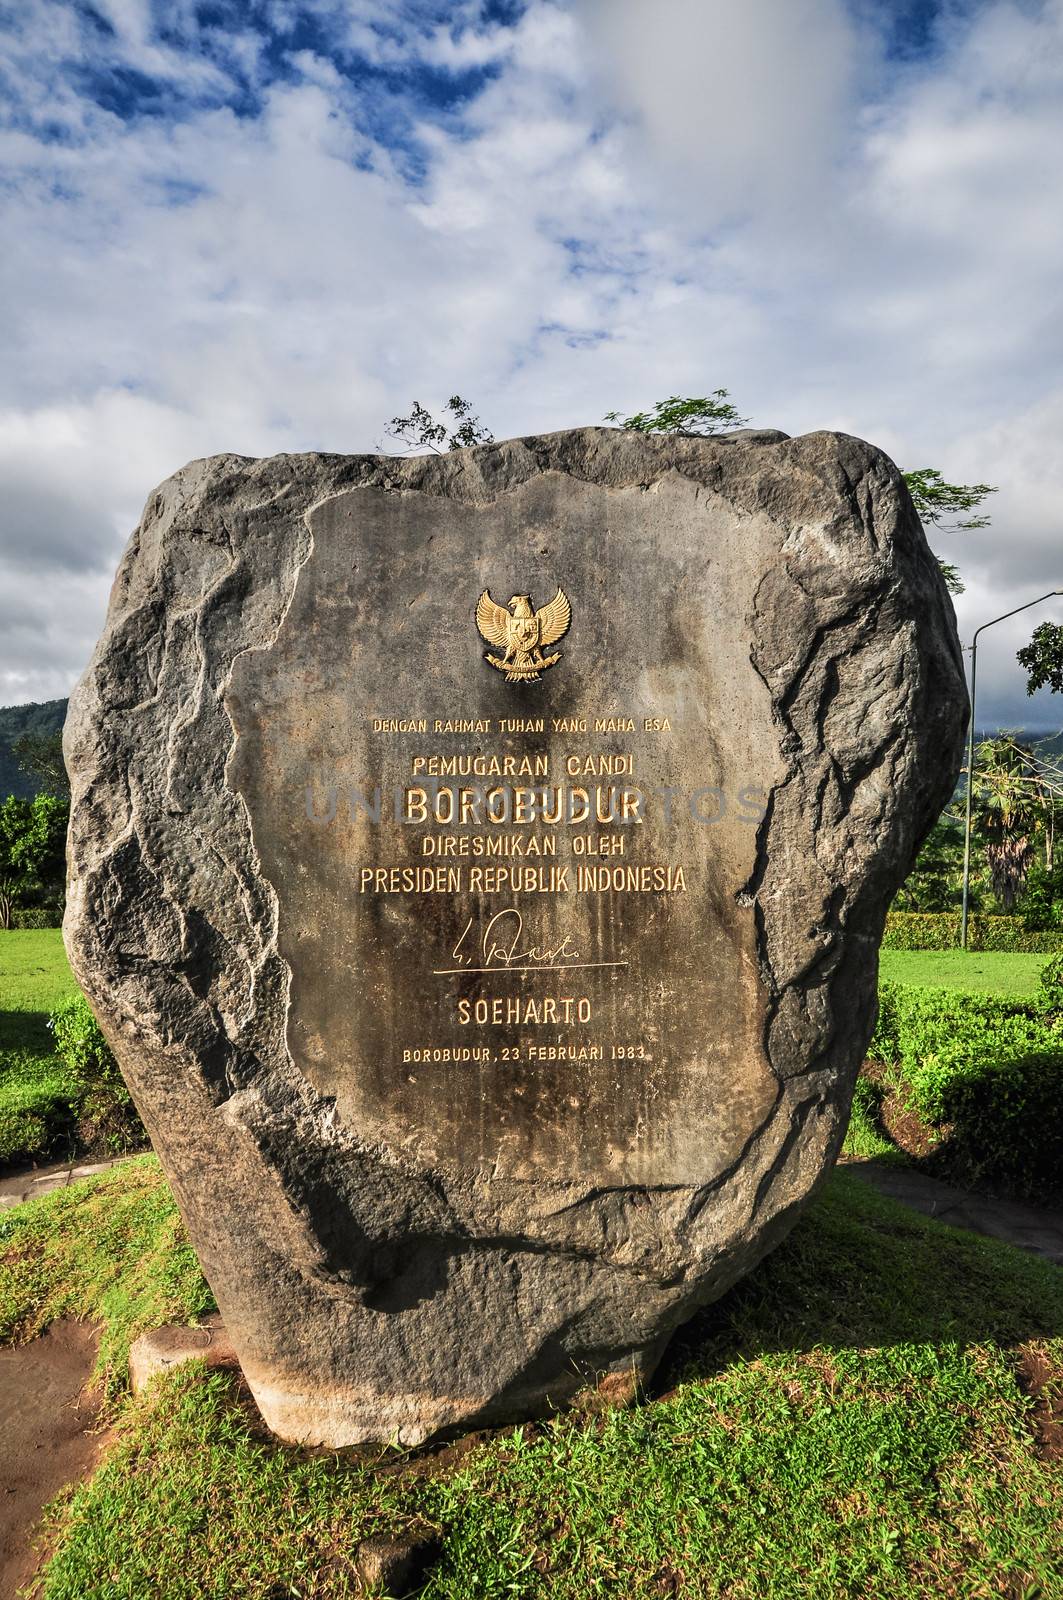 Buddist temple Borobudur Stone sign in Yogjakarta in Java, indonesia